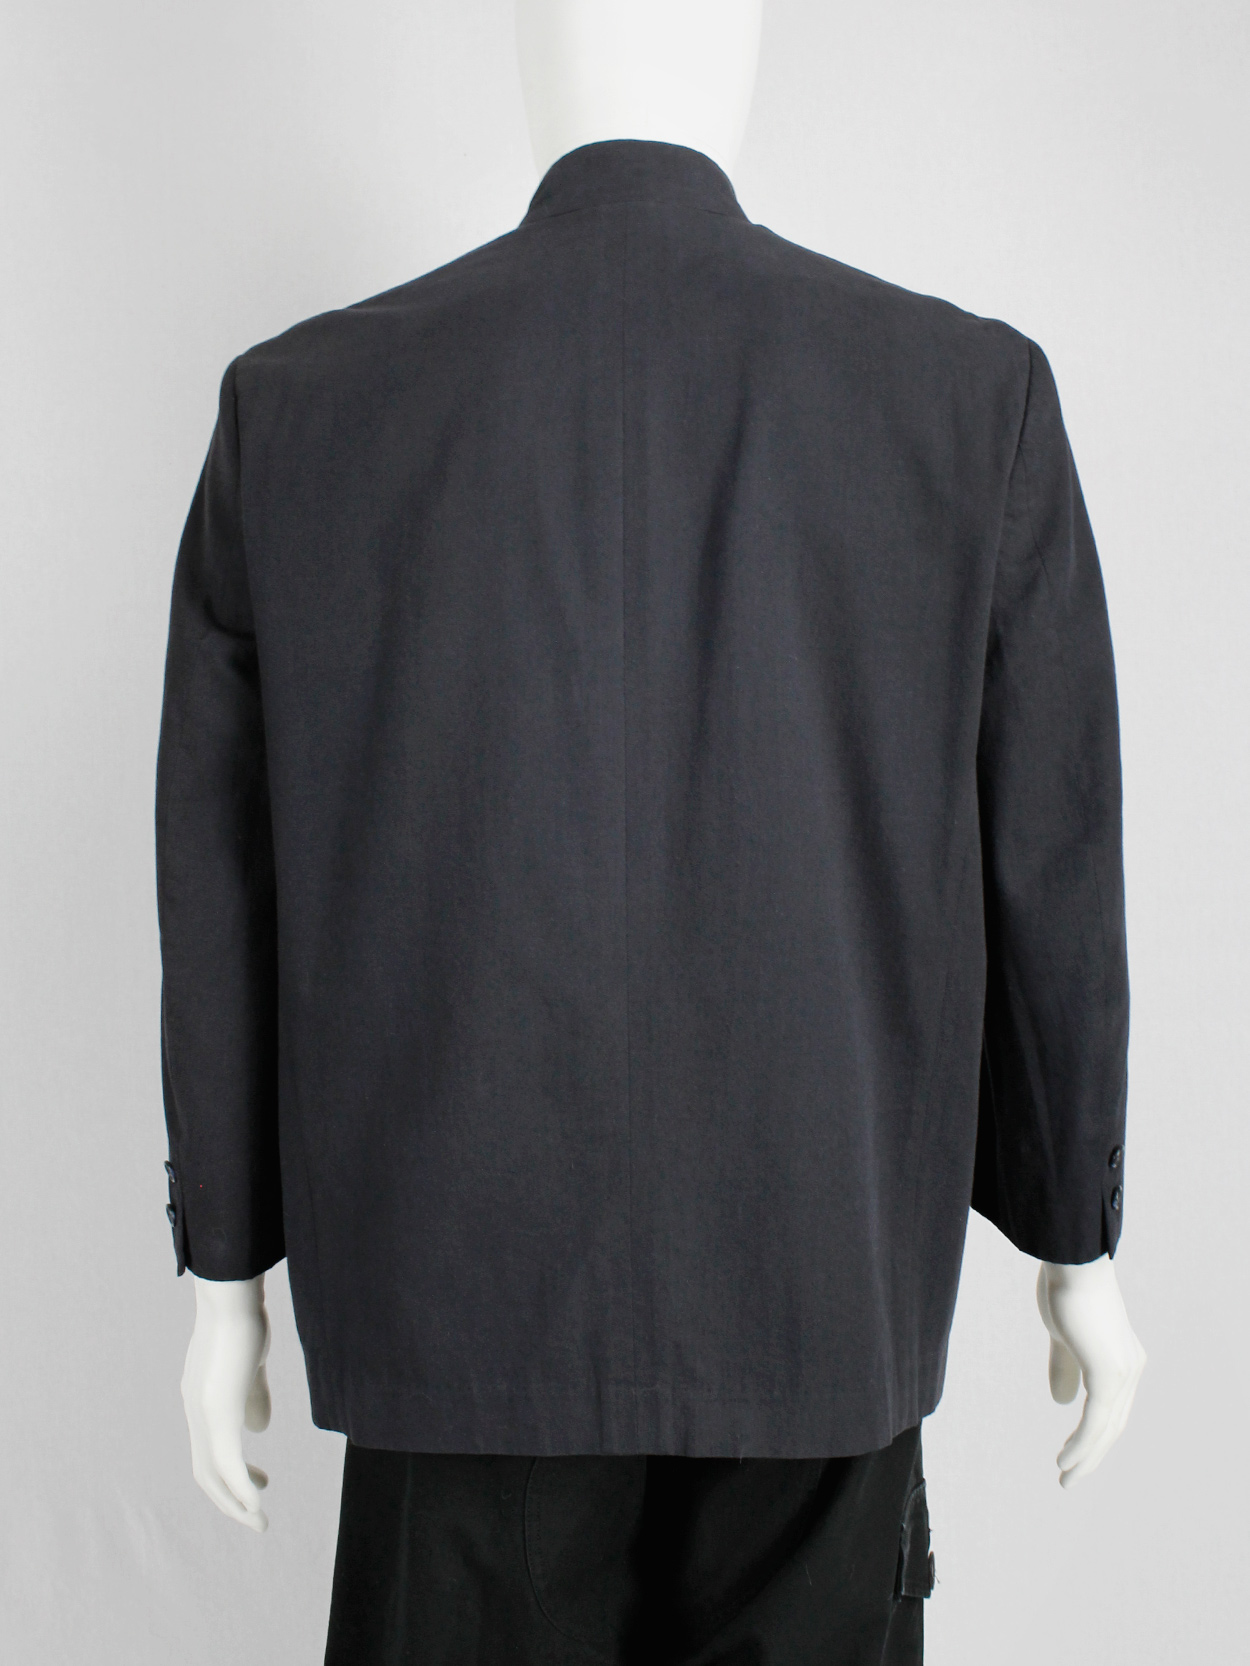 Comme des Garçons Homme black minimalist blazer with two breast pockets ...